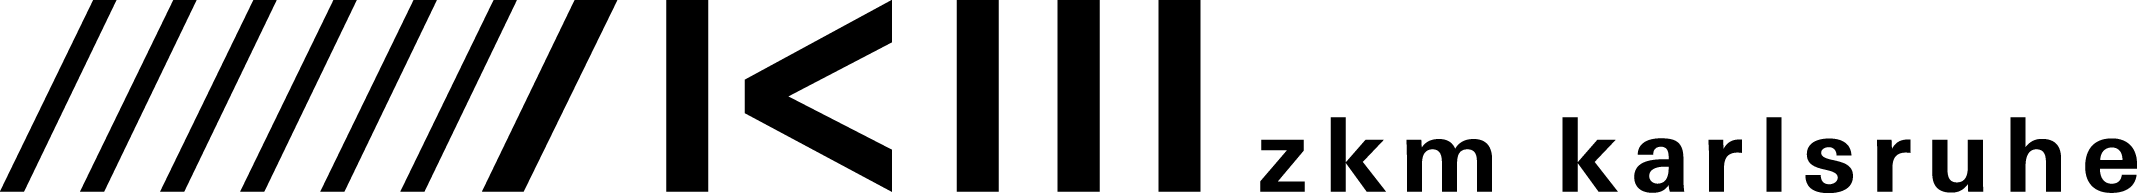 logo zkm